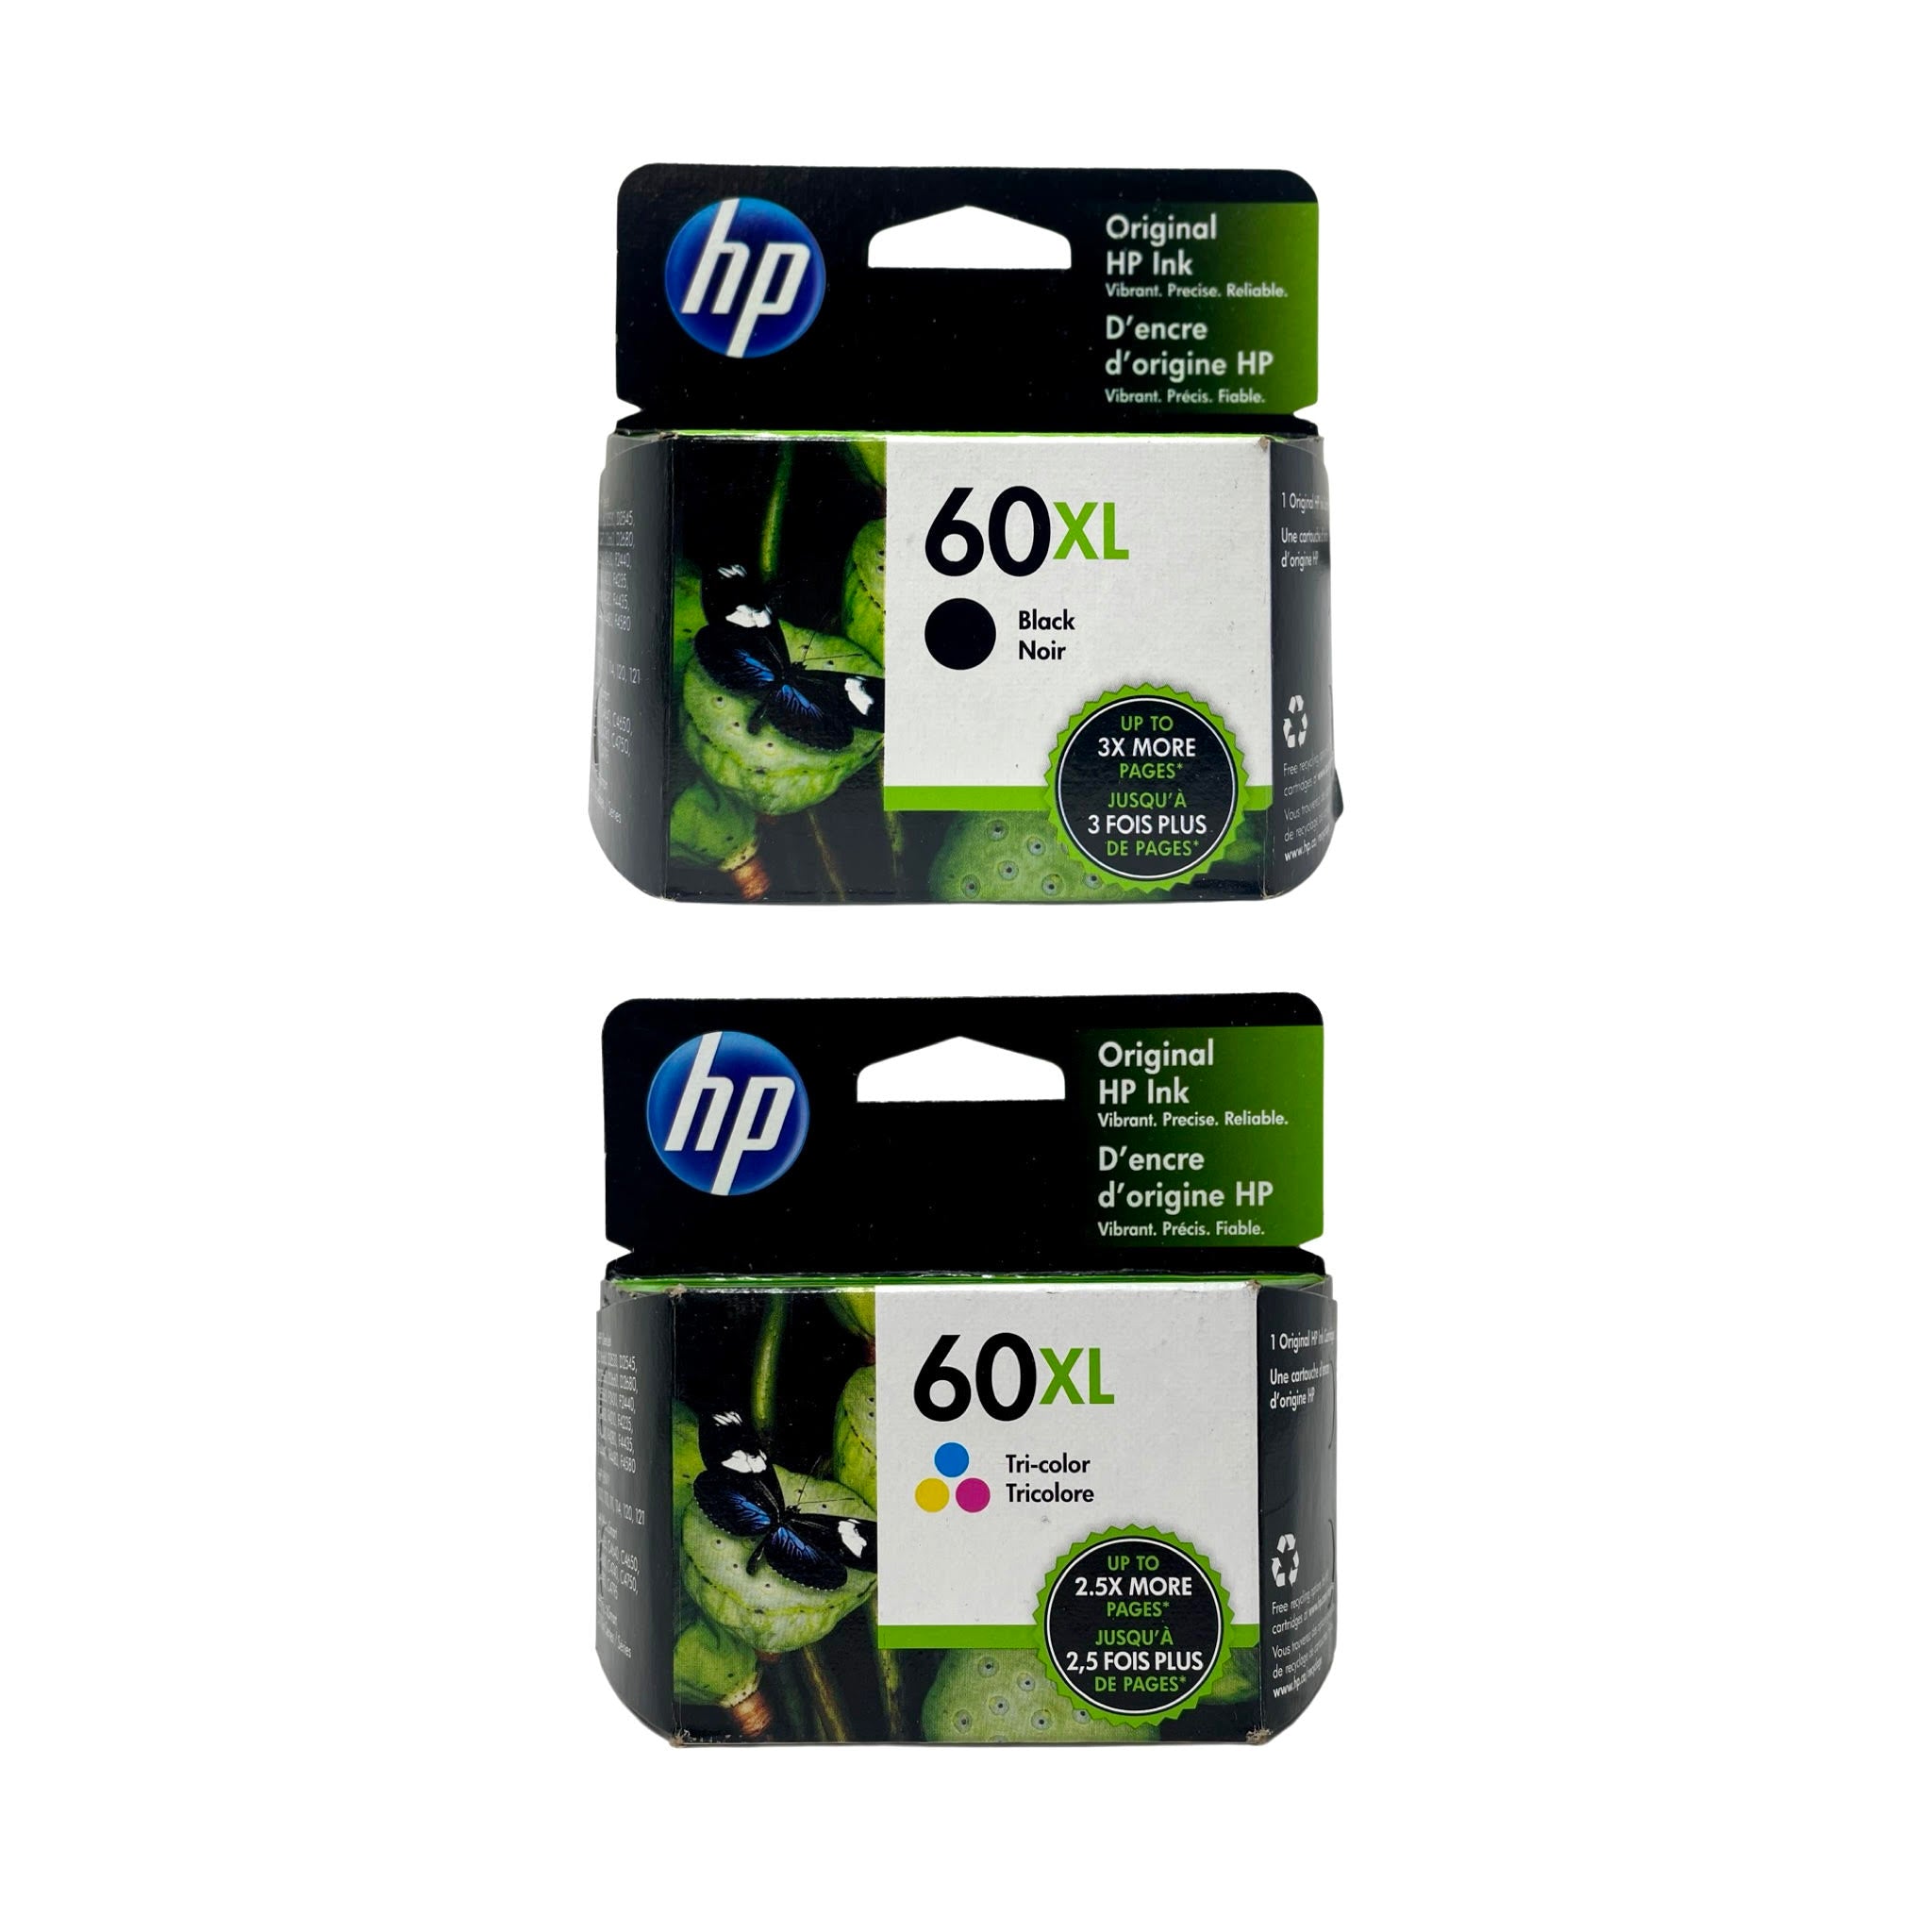 HP 60XL High Yield Ink 2 Pack - Black Tri Color - Original HP Ink Cartridges